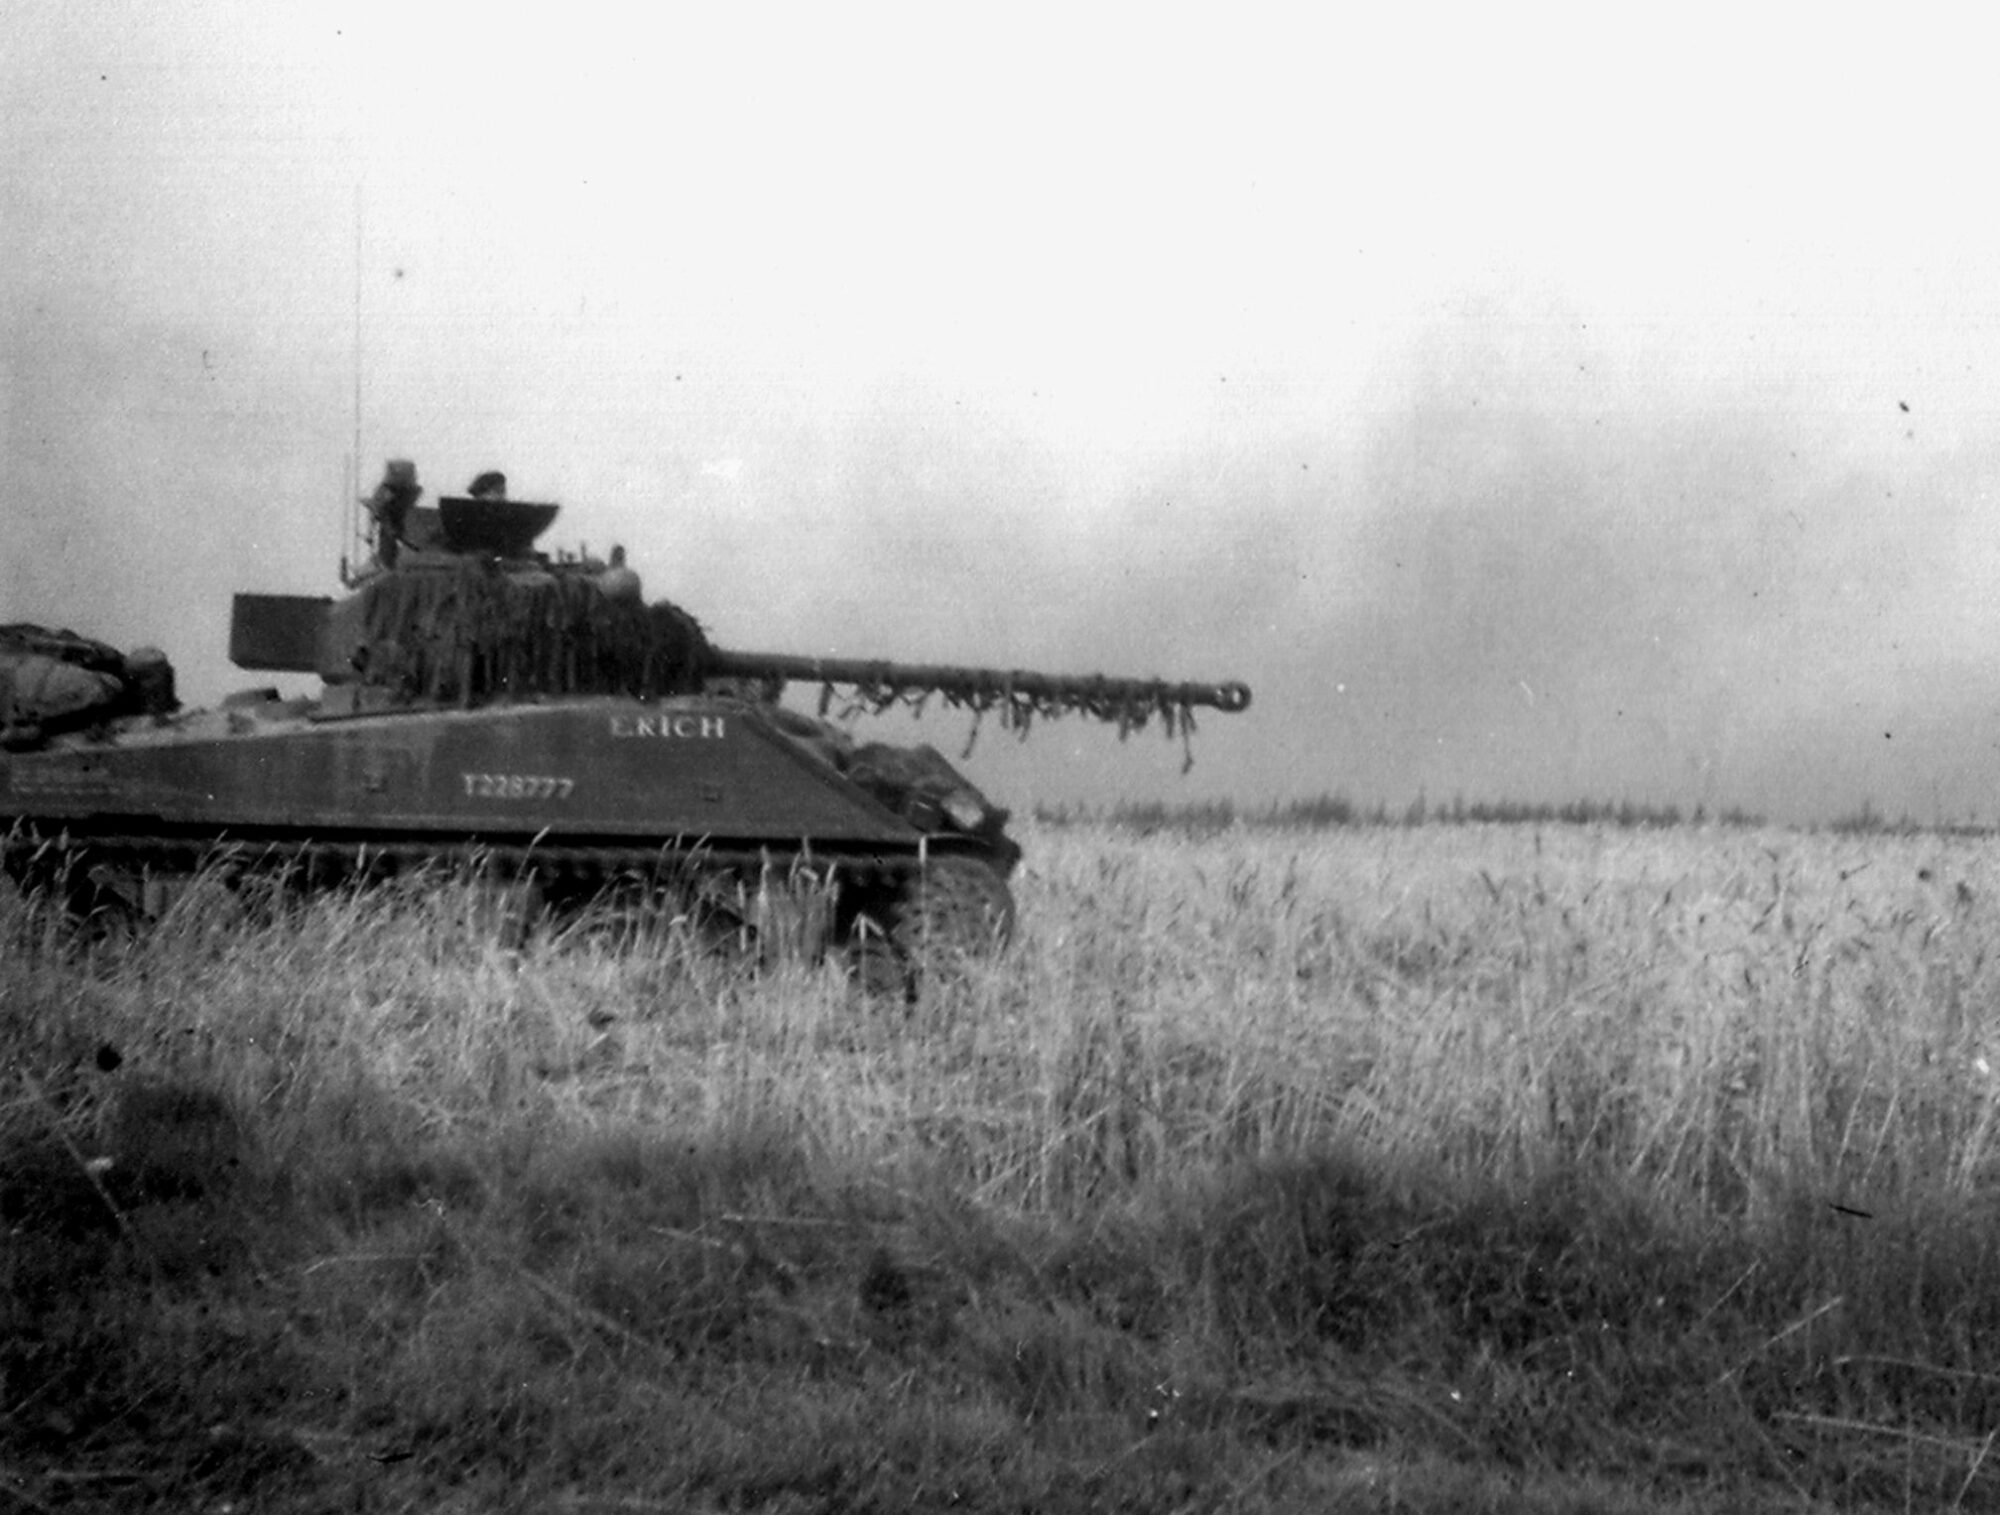 M4 Sherman tank_V3 